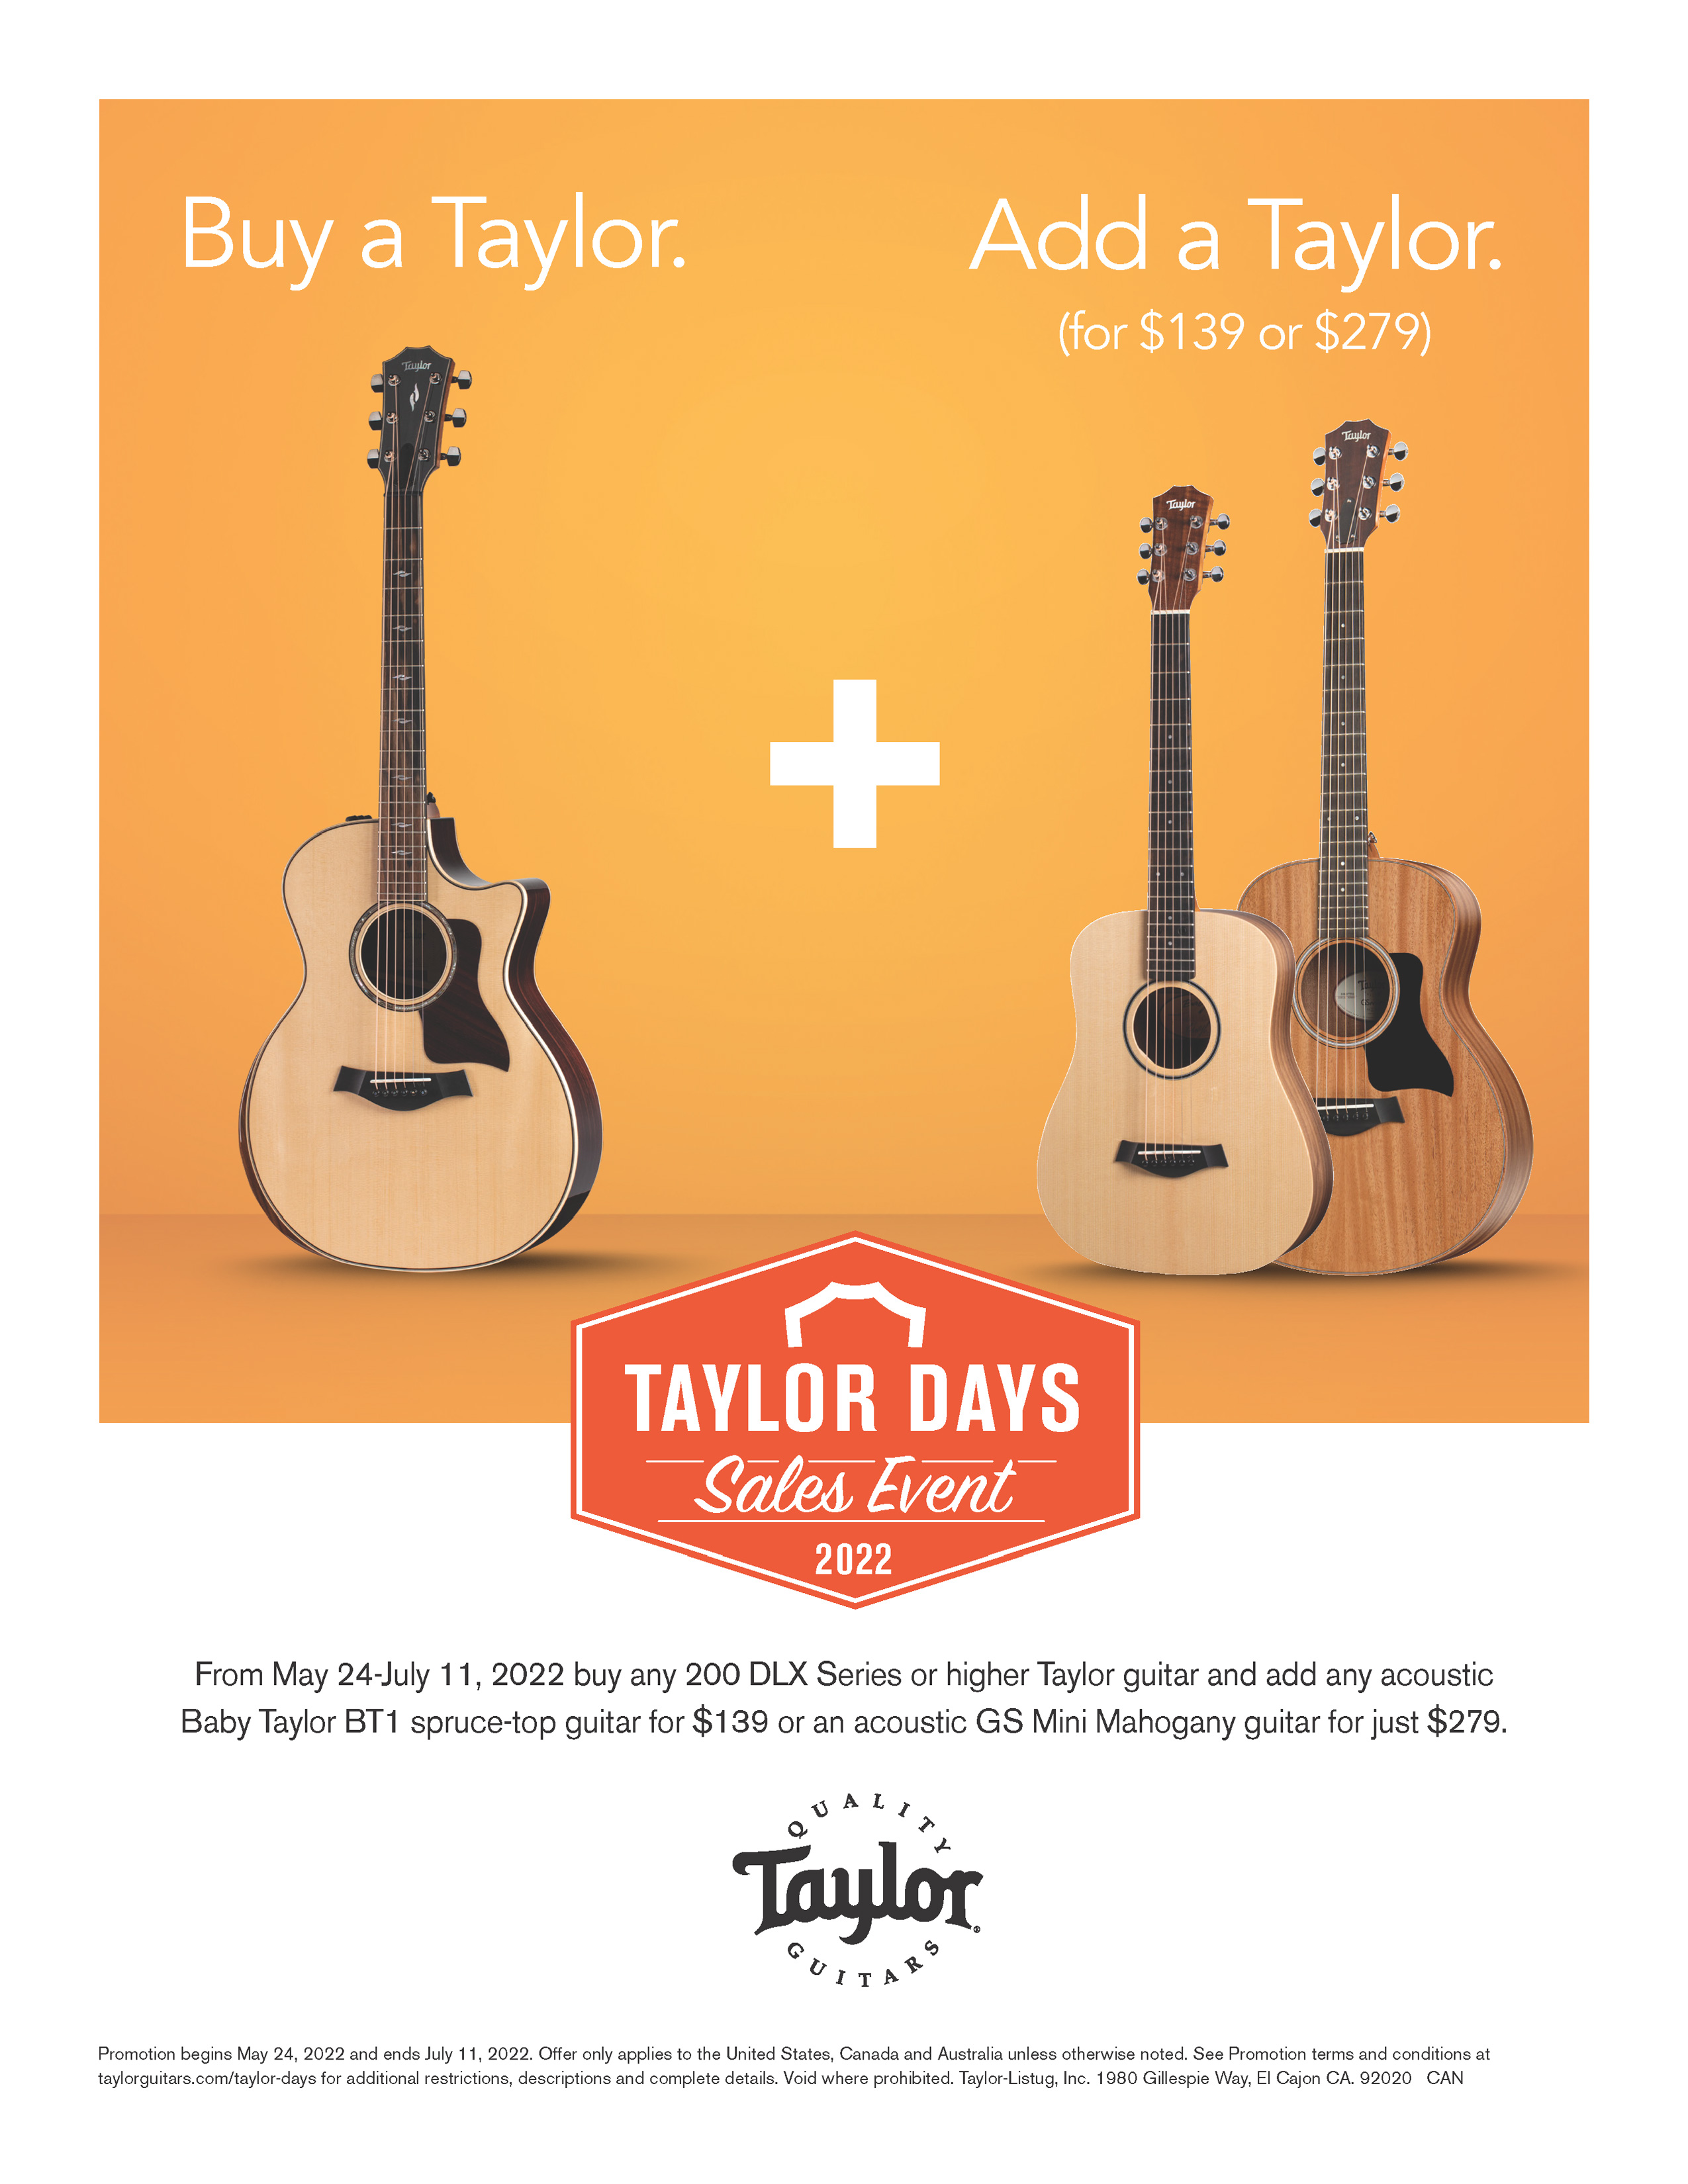 Taylor Days Sale Event